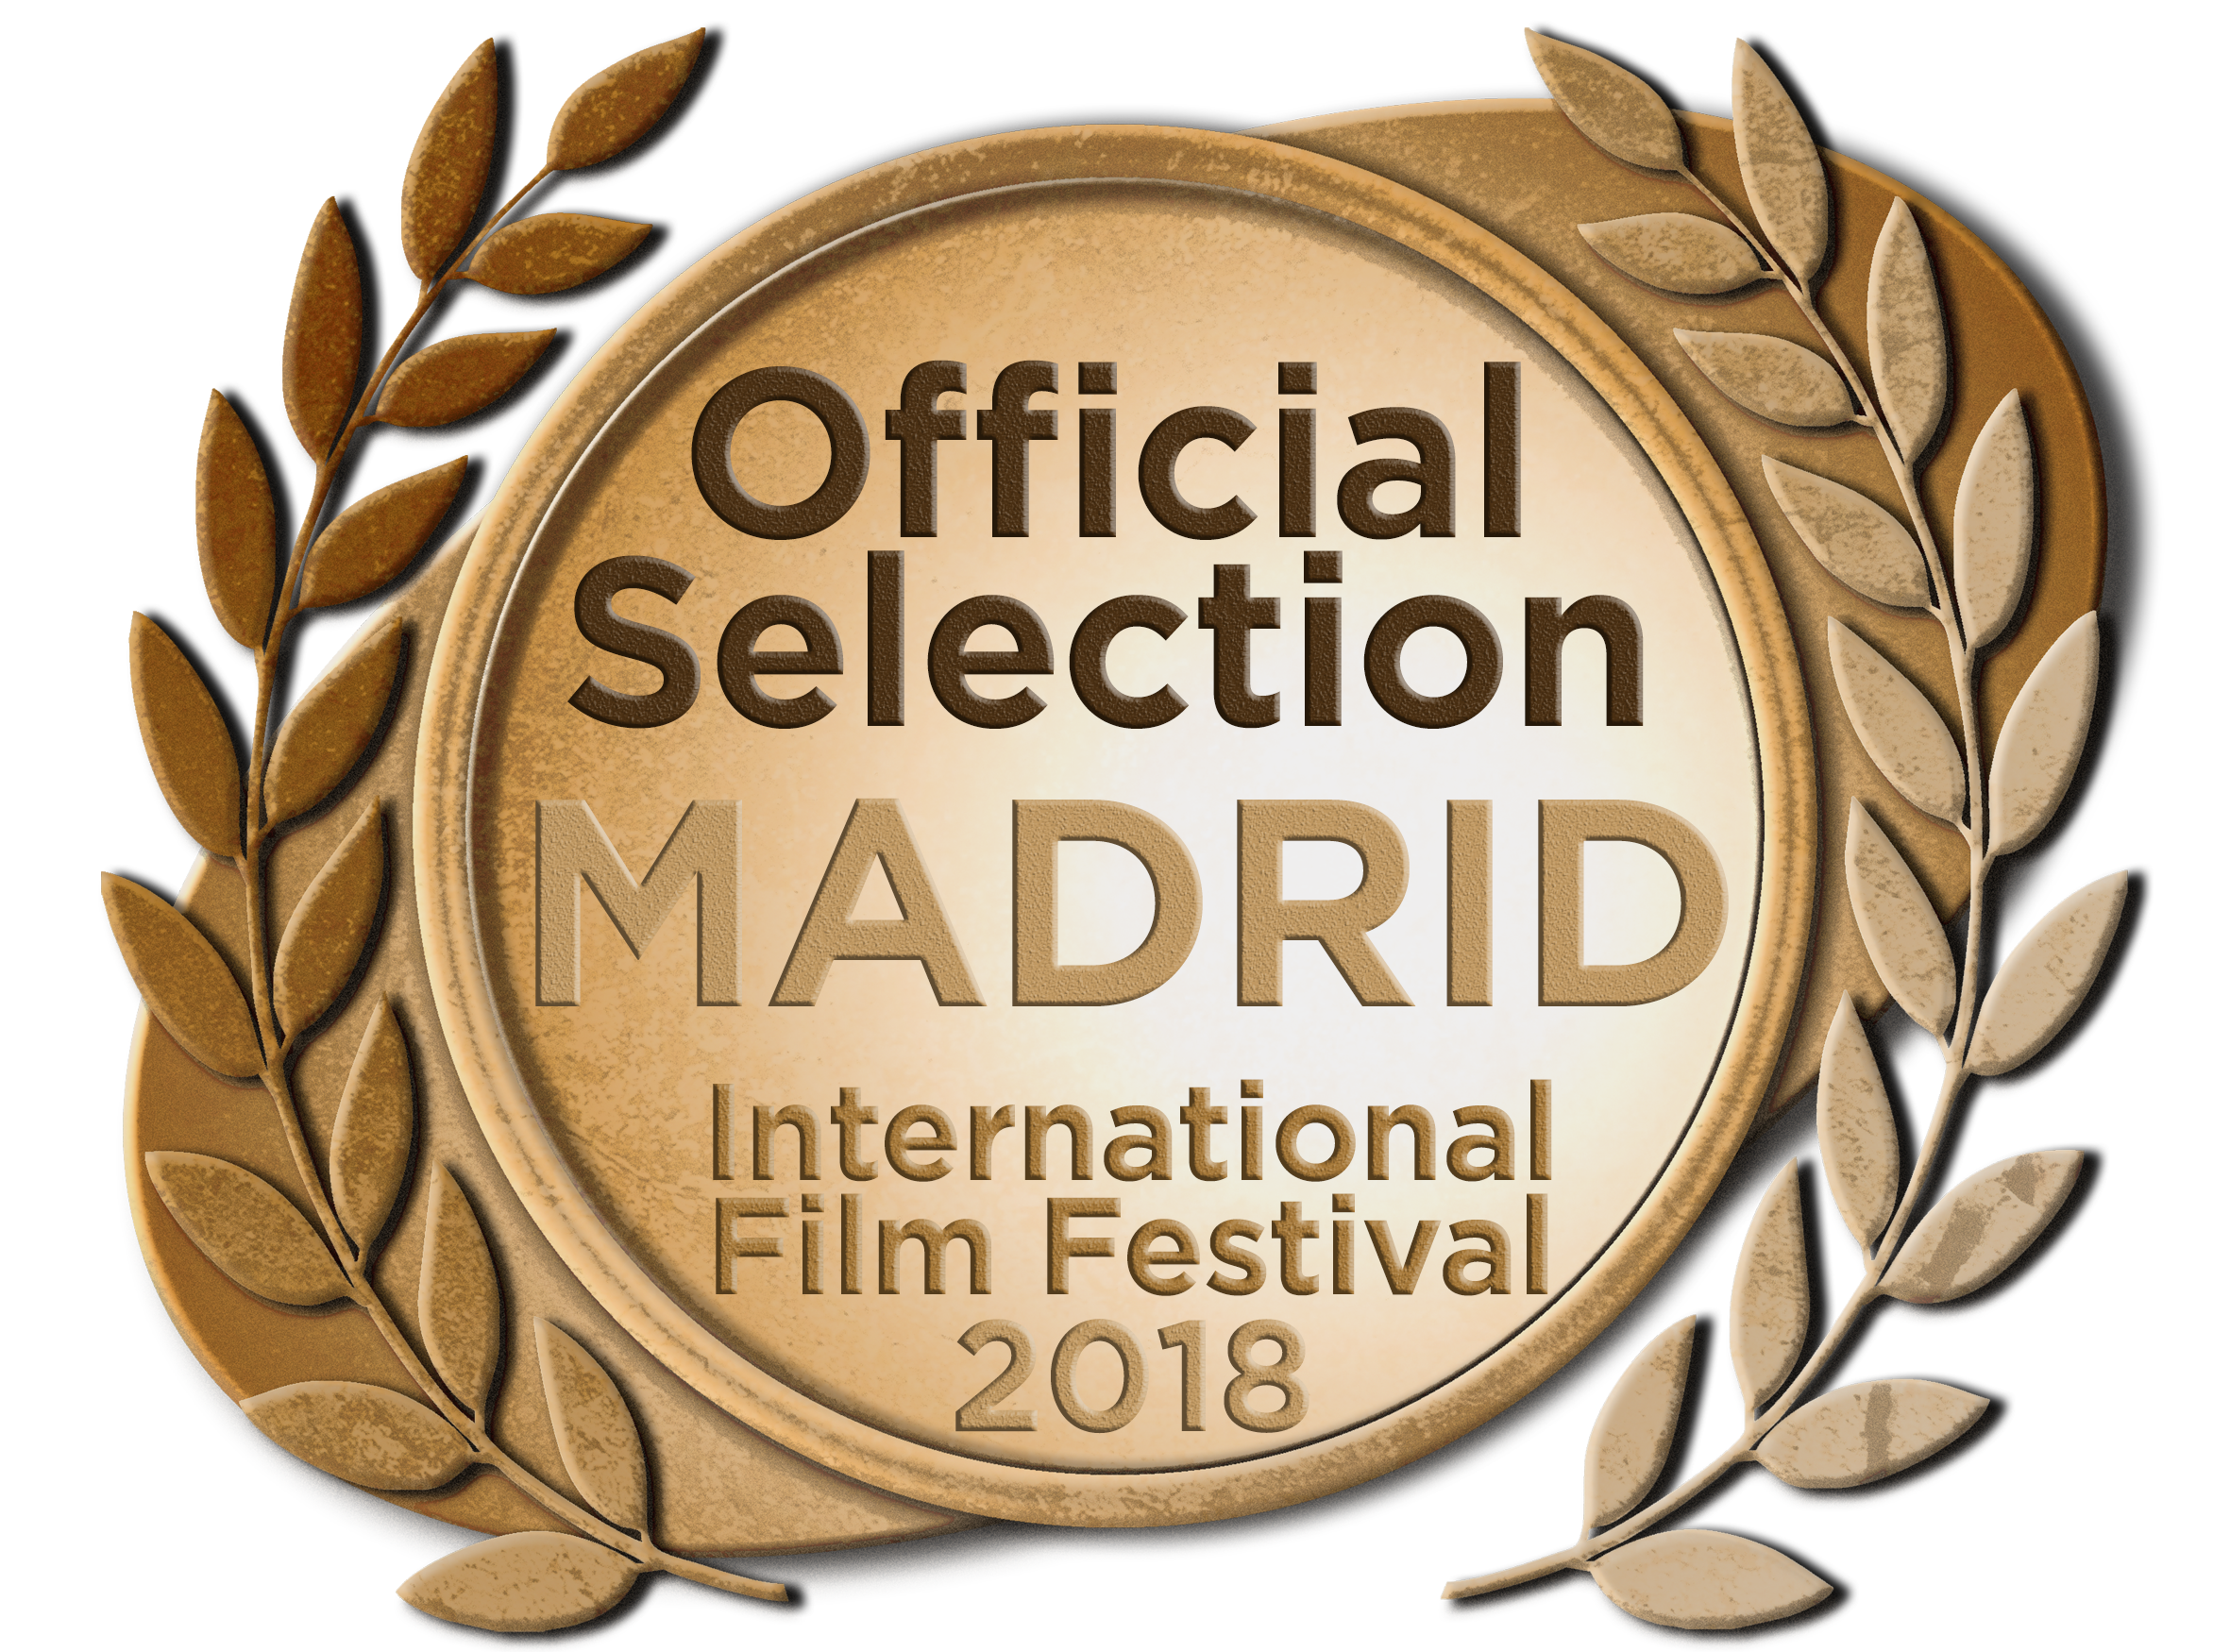 Official selection MADRID International Film Festival 2018